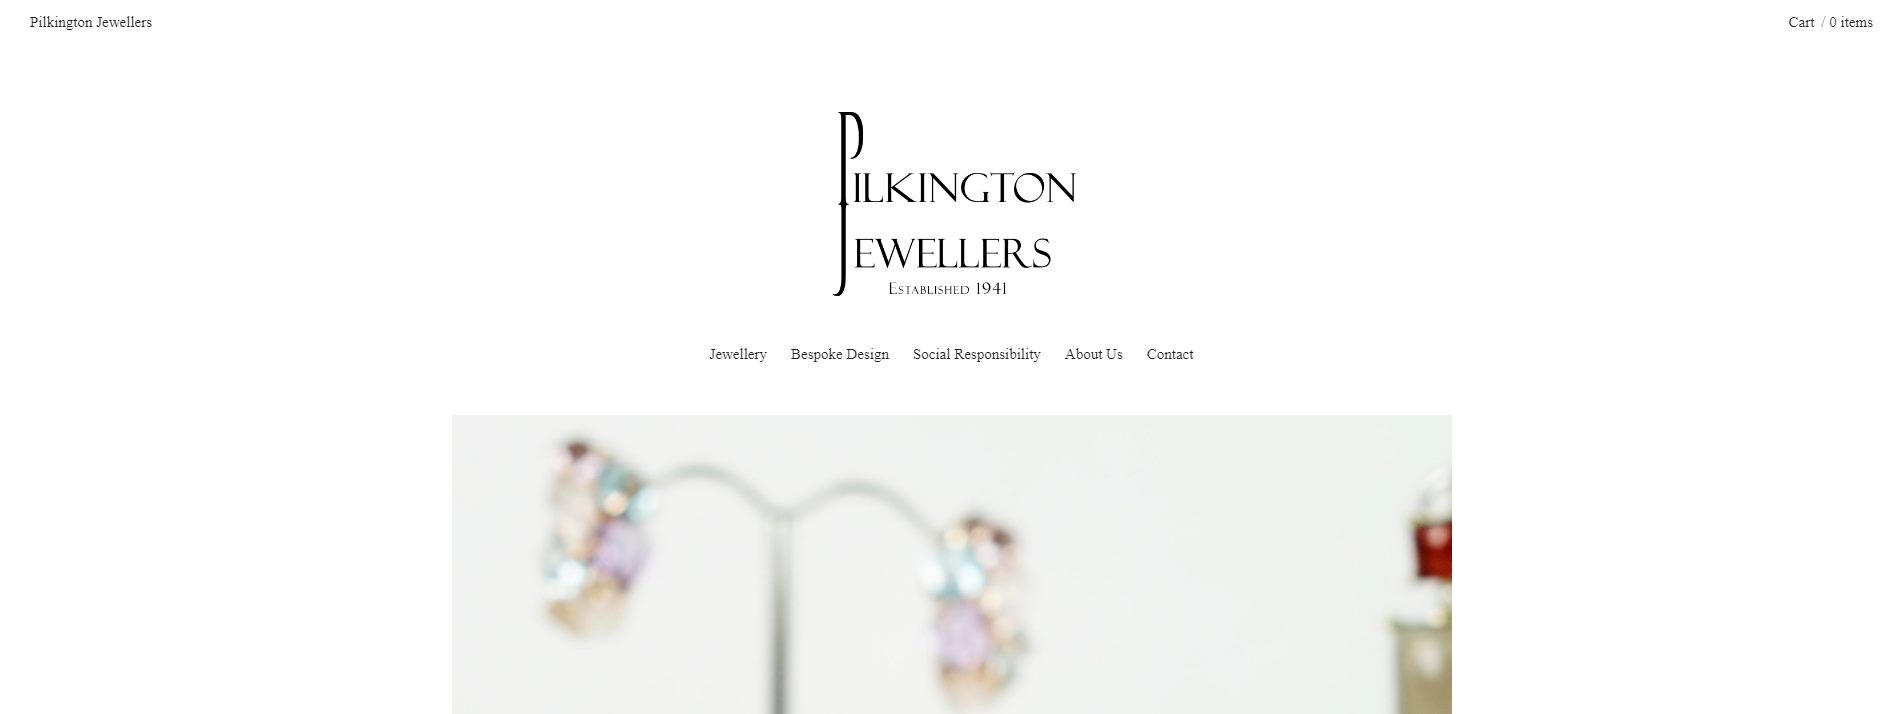 pilkington jewellers engagement rings & wedding band shop melbourne